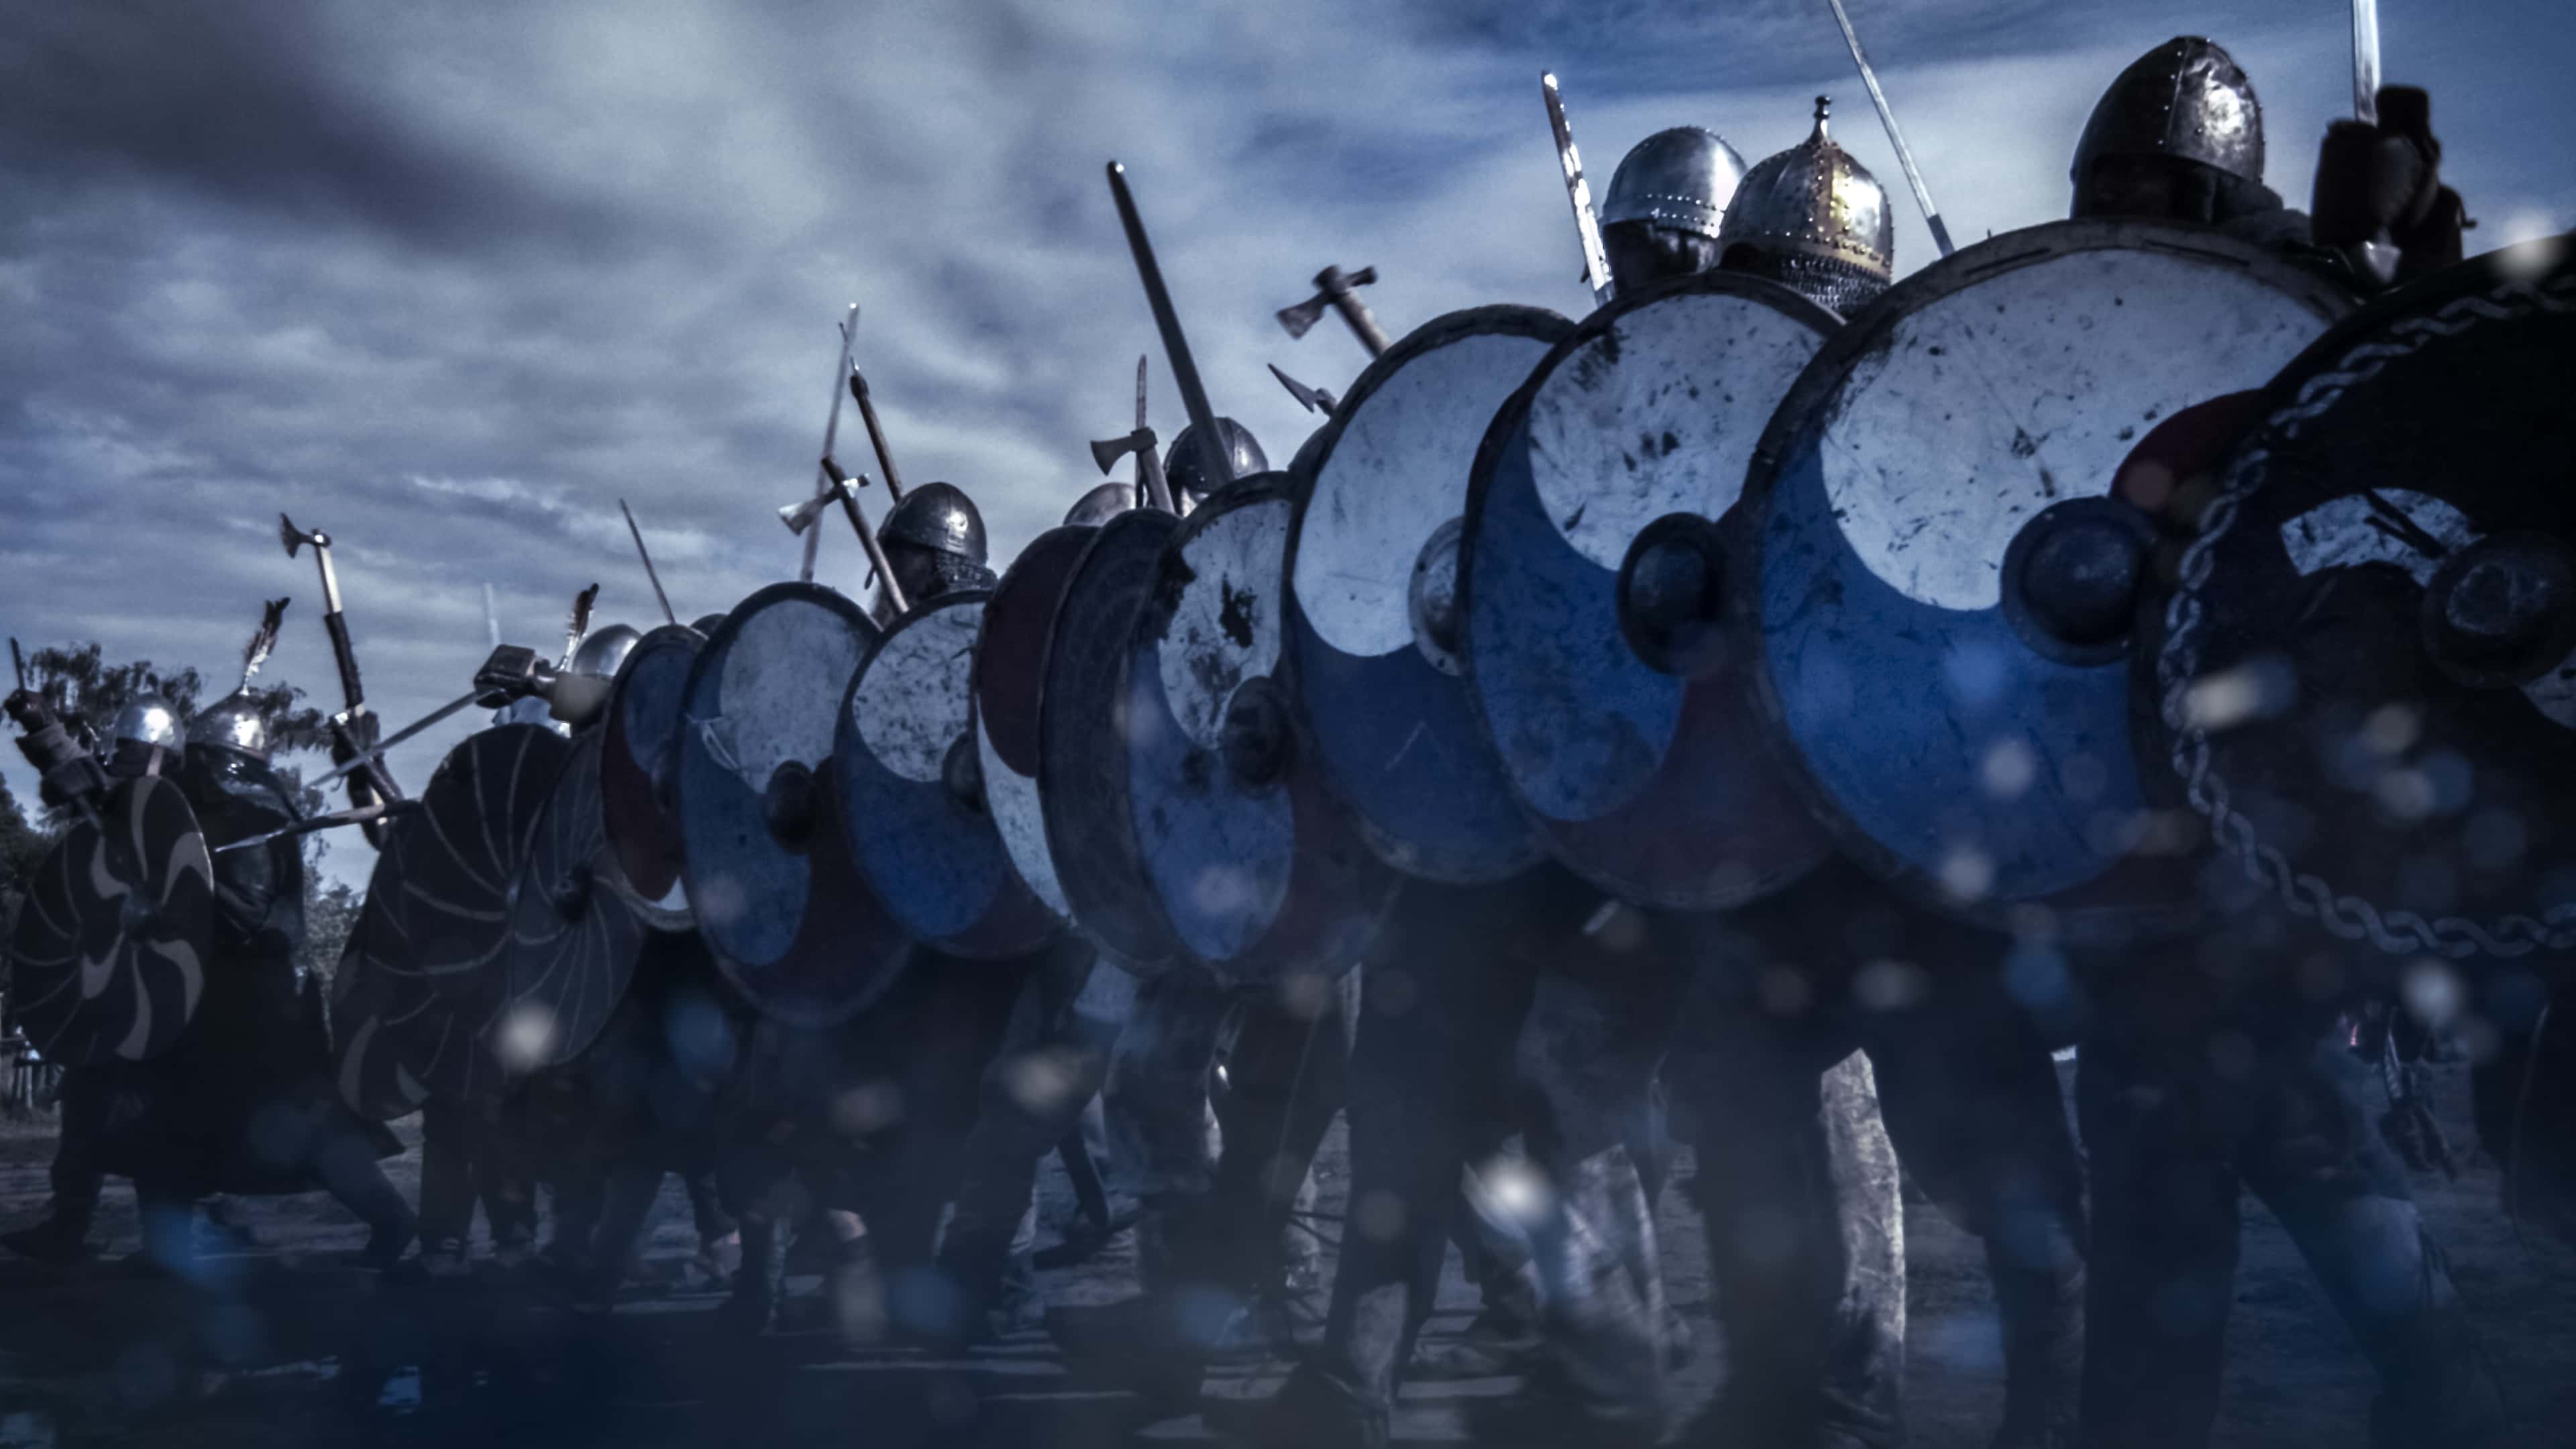 Shot of Advancing Army of Viking Warriors. Medieval Reenactment.